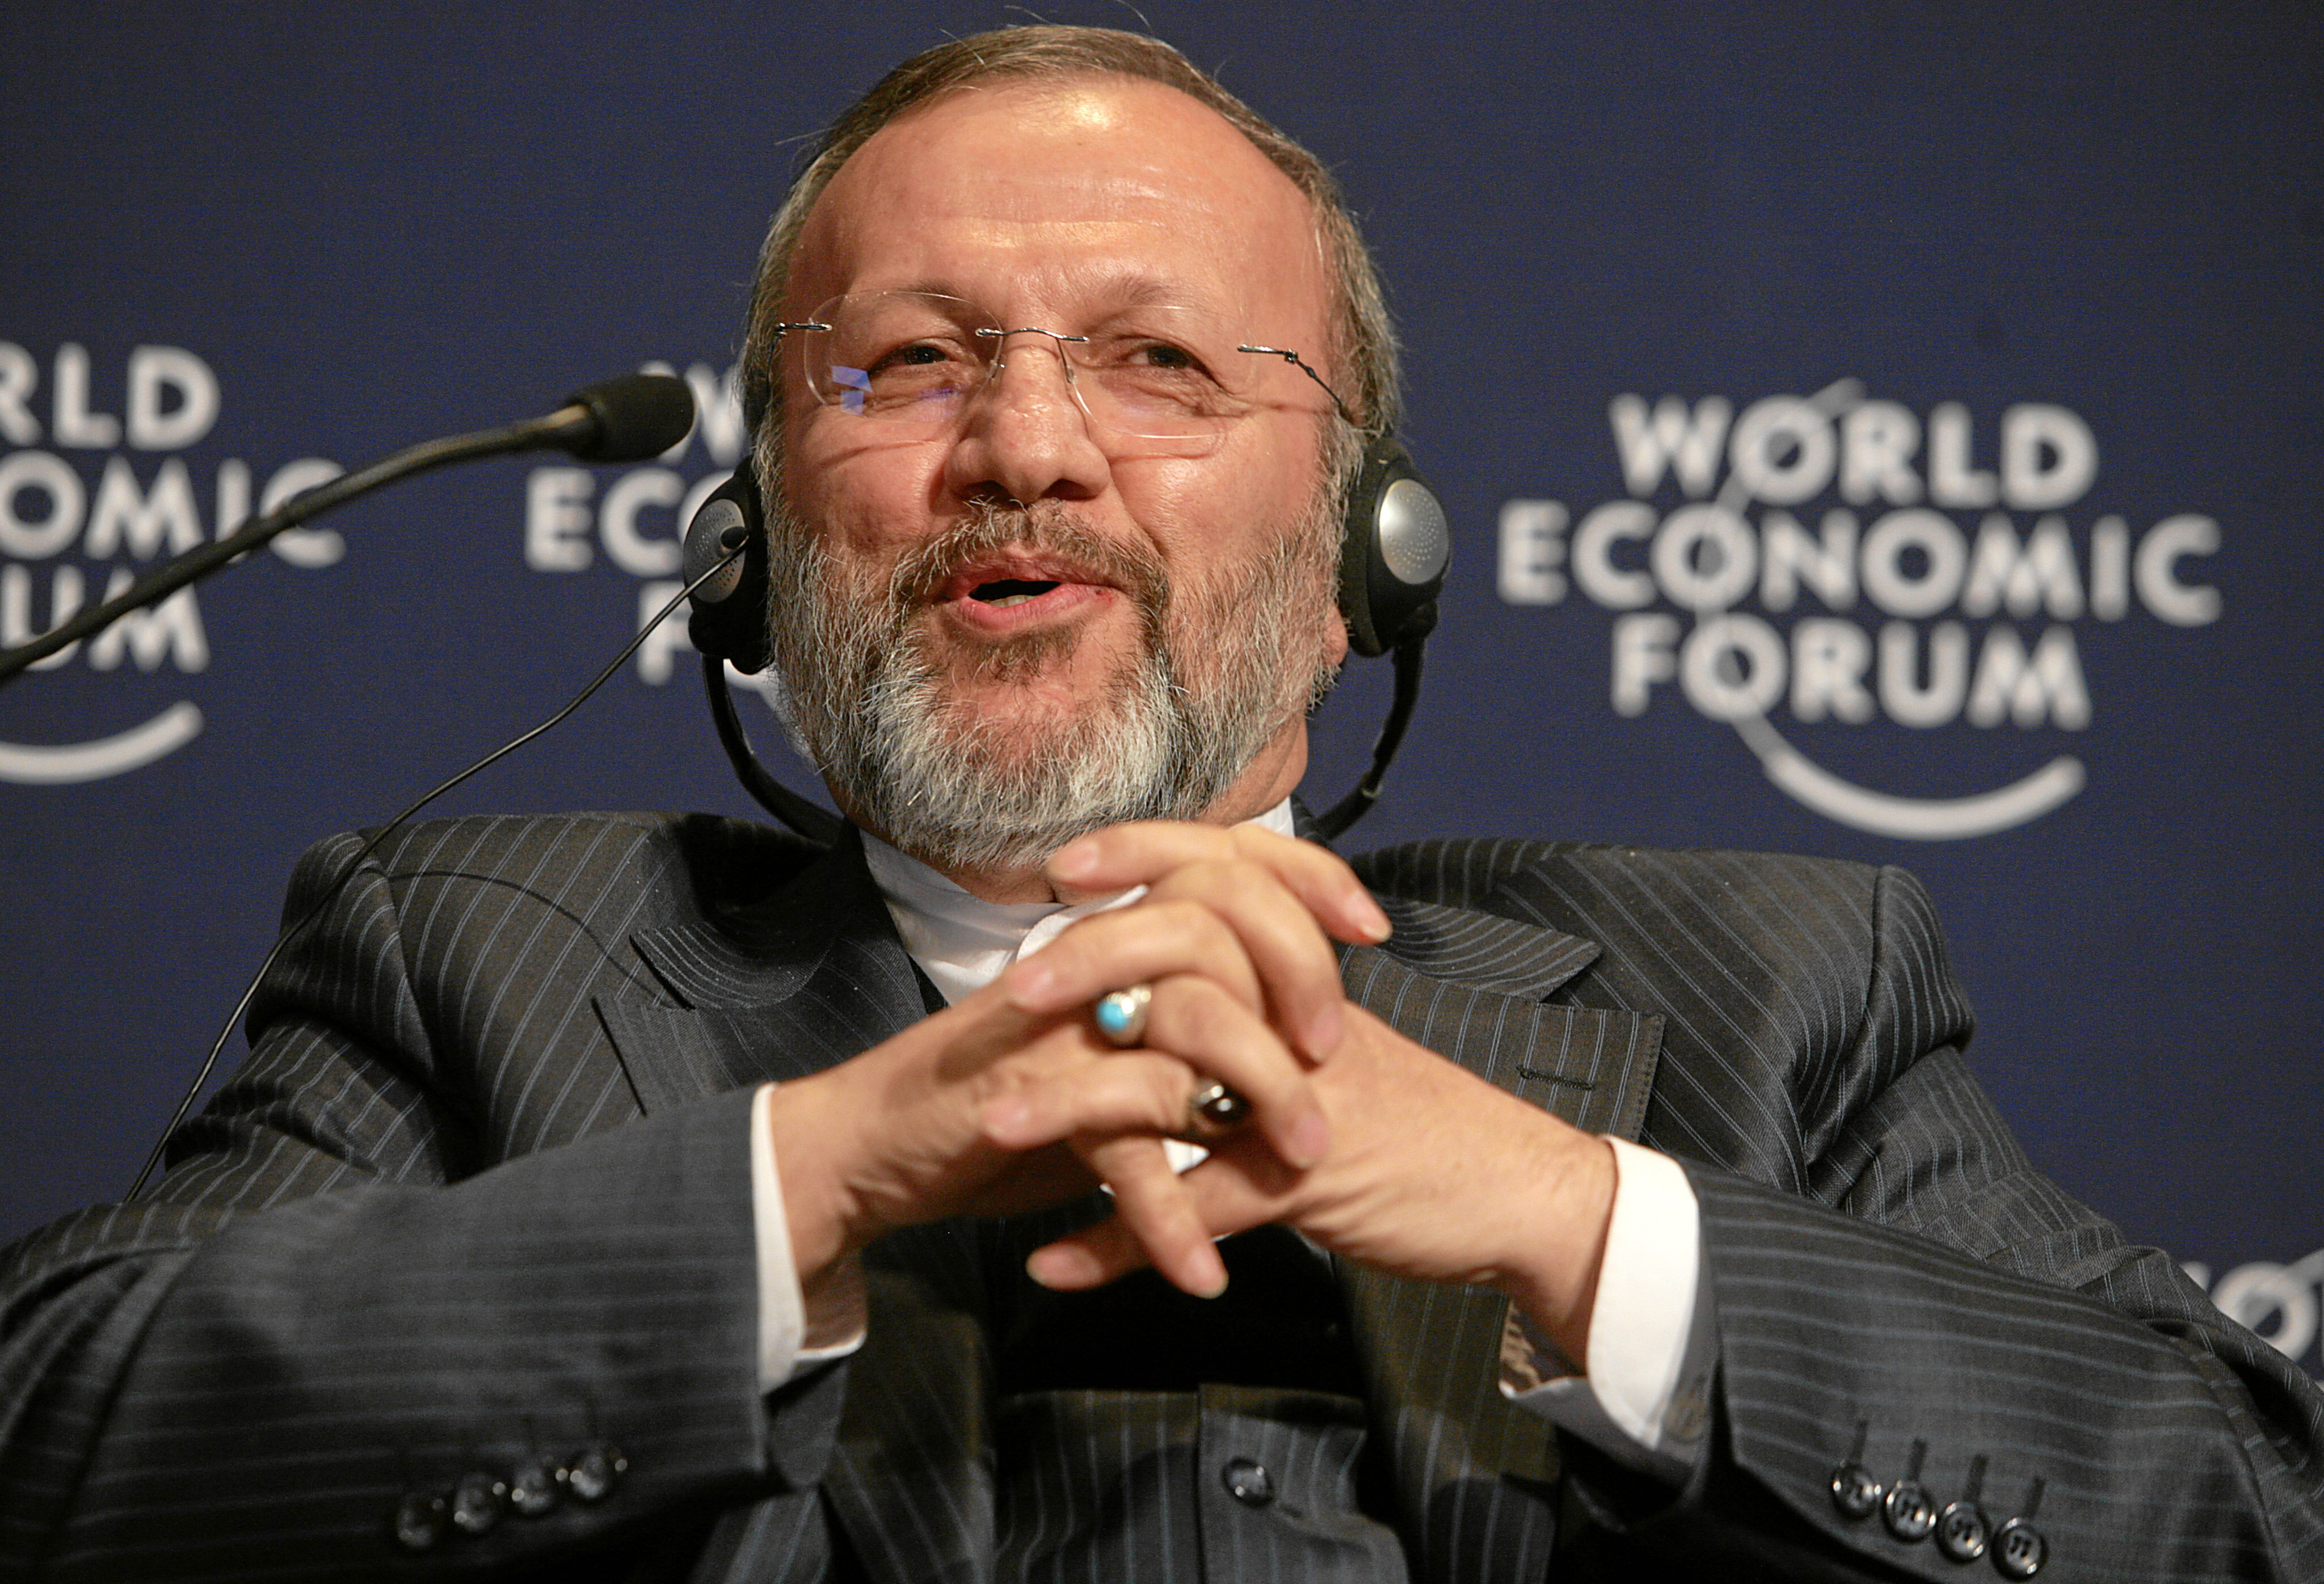 Manouchehr_Mottaki_at_the_World_Economic_Forum_Annual_Meeting_Davos_2008.jpg (2.23 MB)